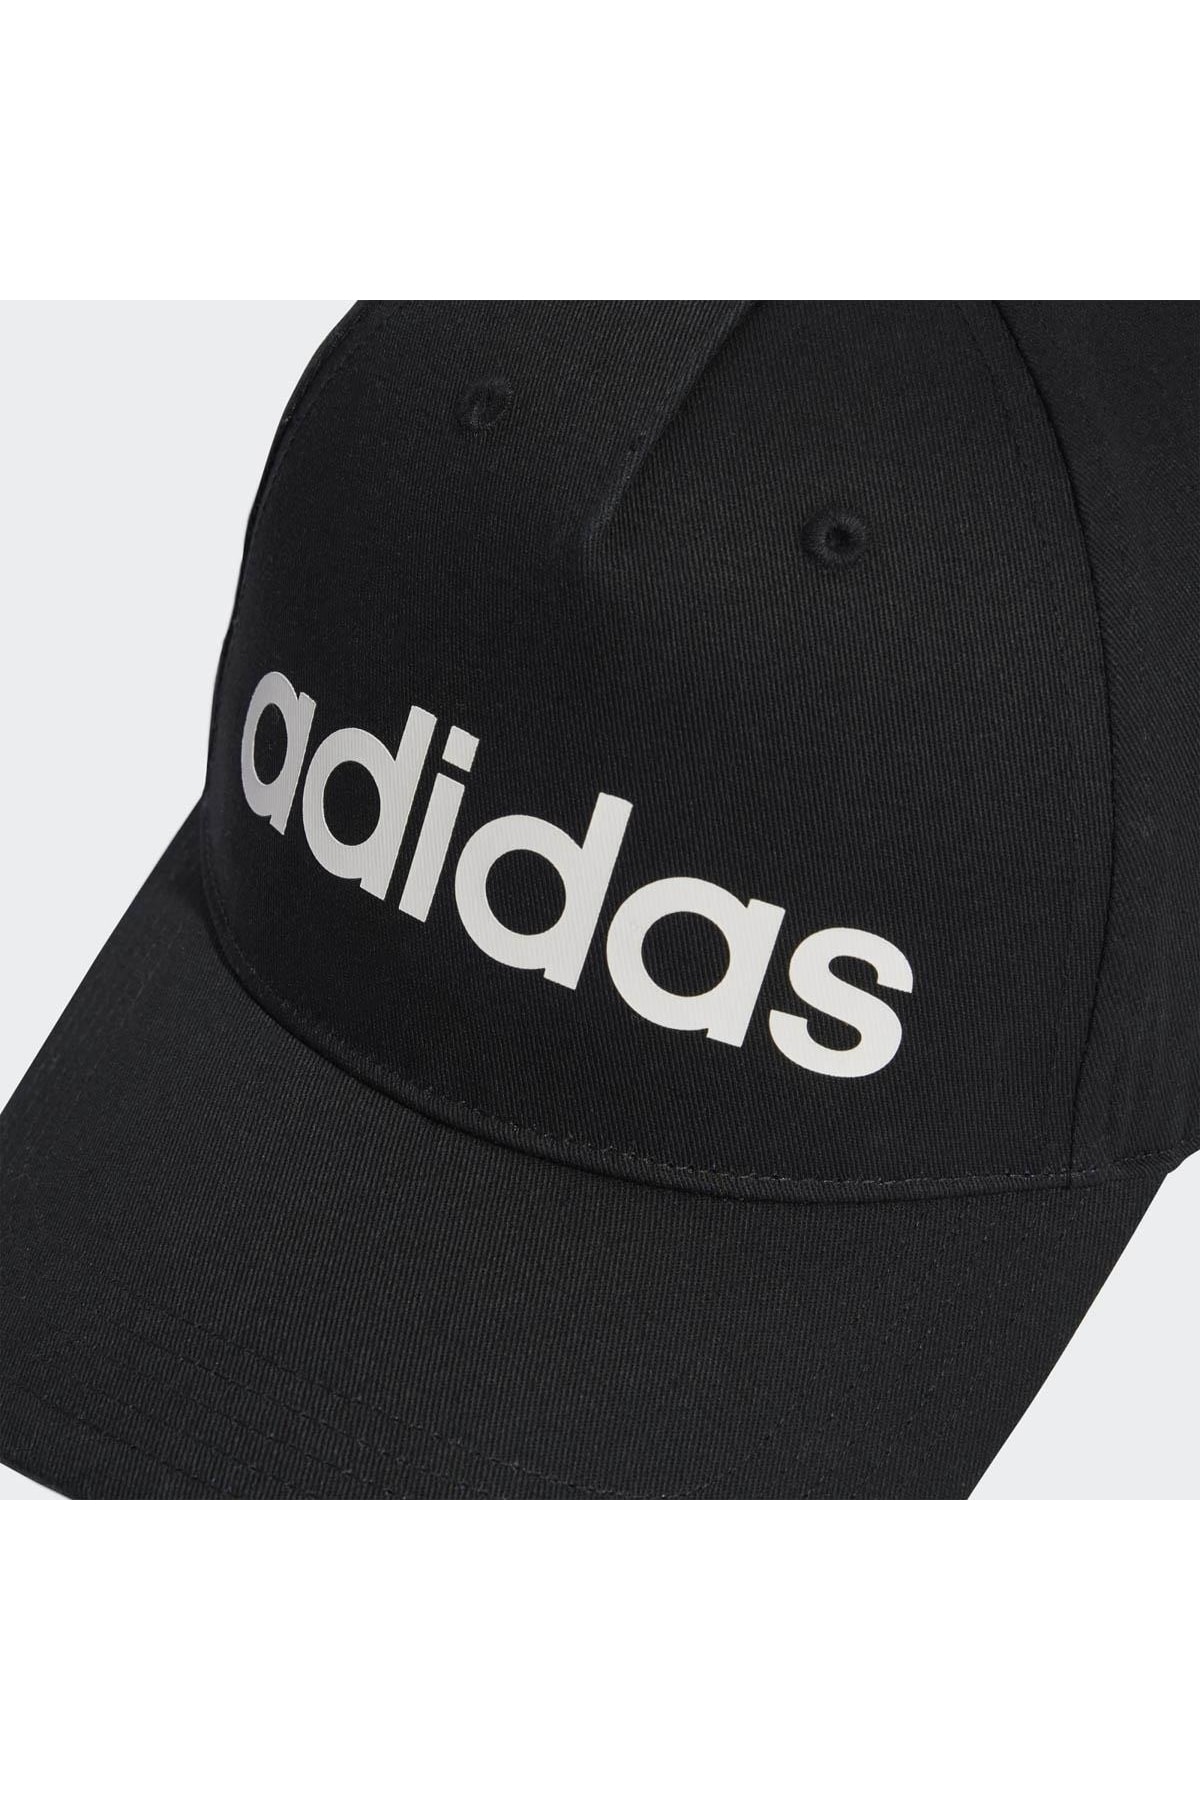 adidas کلاه یونیسکس مشکی - سفید Ht6356 Daily Cap